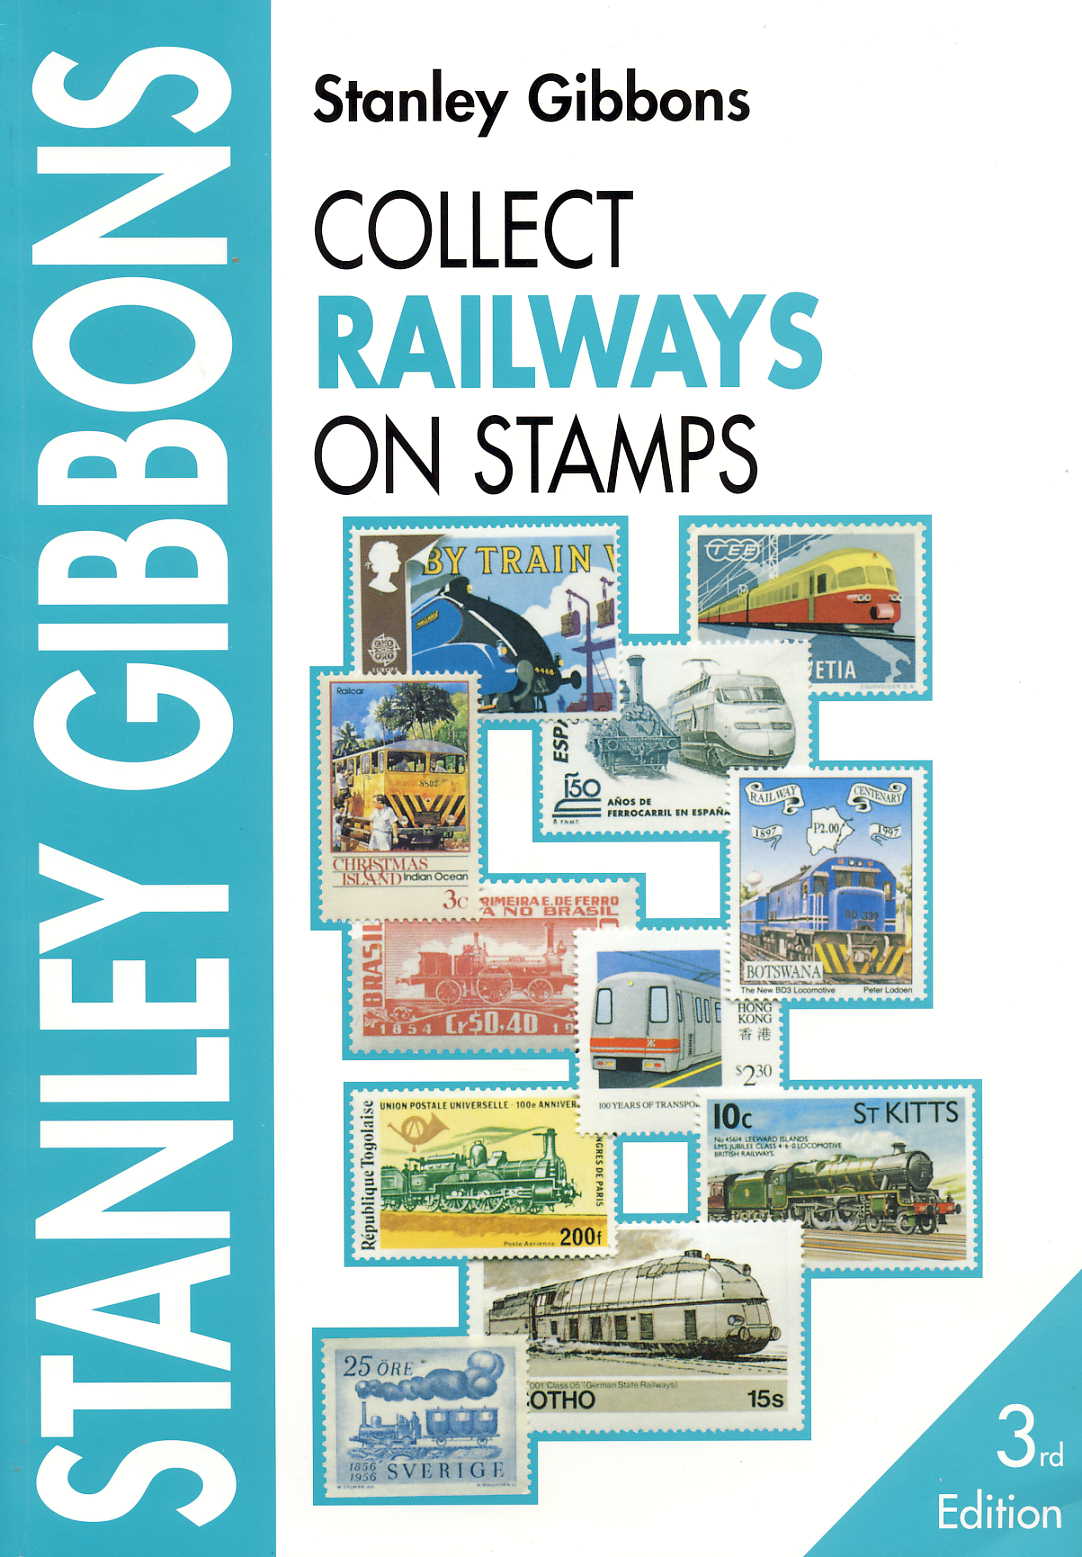 Stanley Gibbons Collect Railways on stamps / Weltkatalog Eisenba